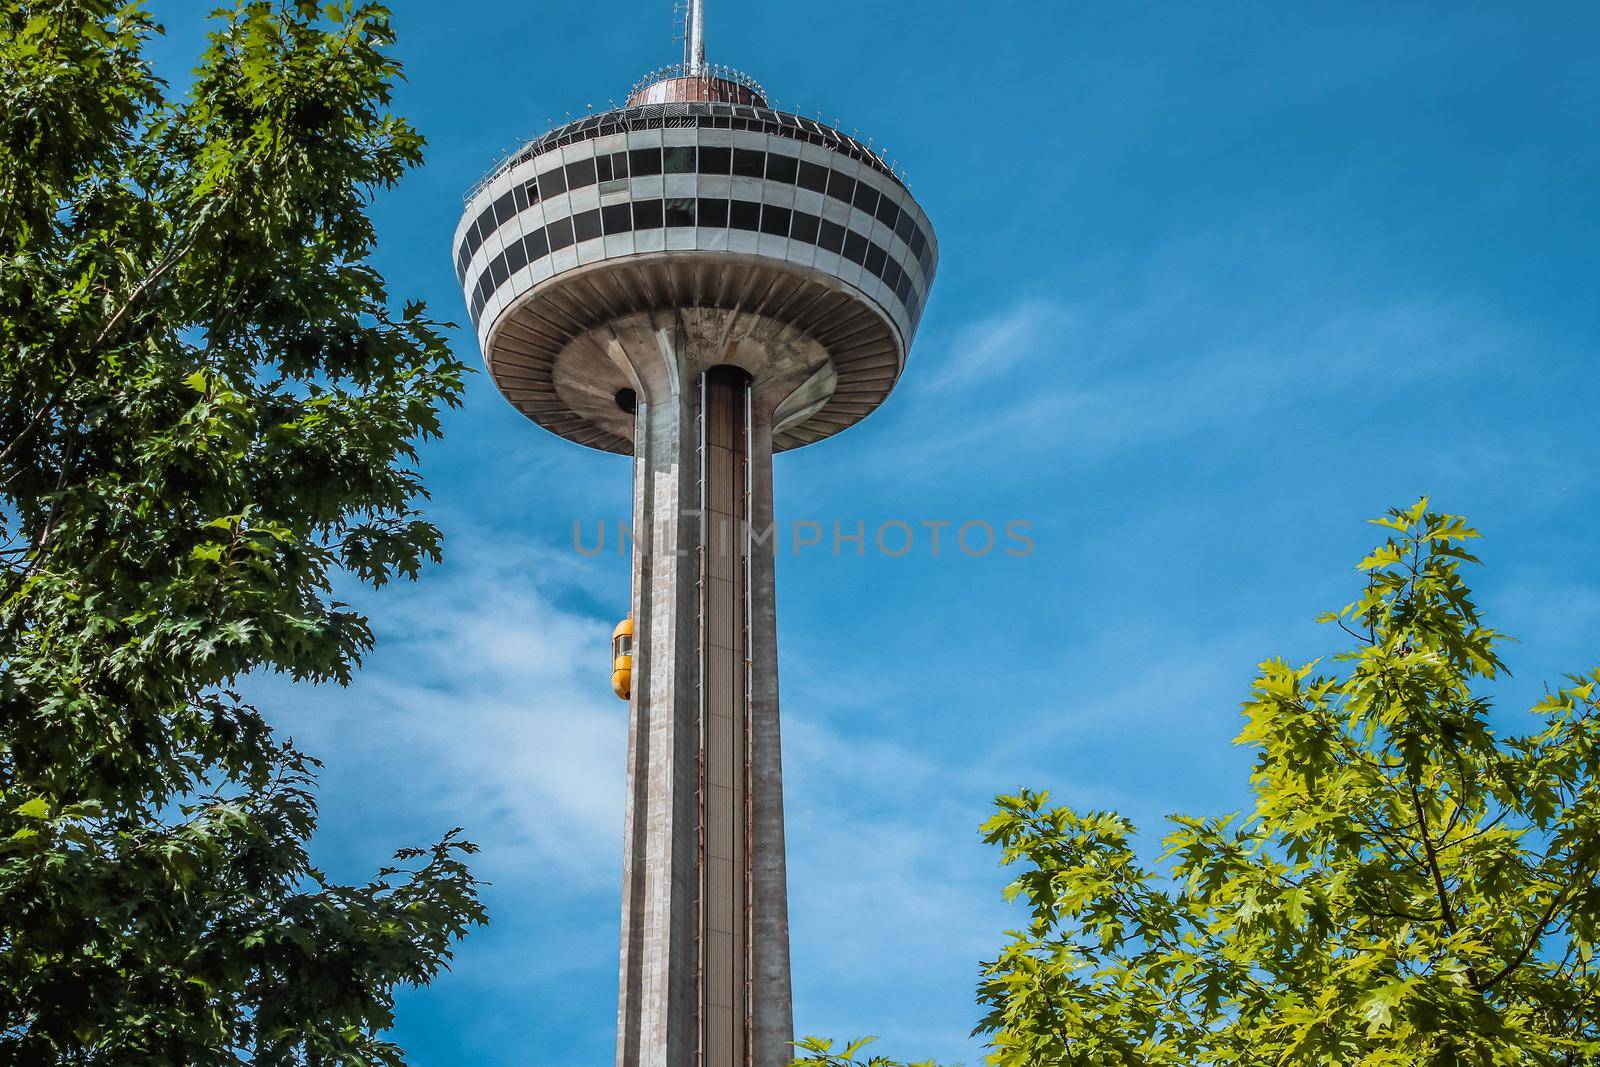 Niagara Falls, Ontario Canada - August 29, 2019: Beautiful view of skylon tower at Niagara falls with blue sky and green trees. by JuliaDorian